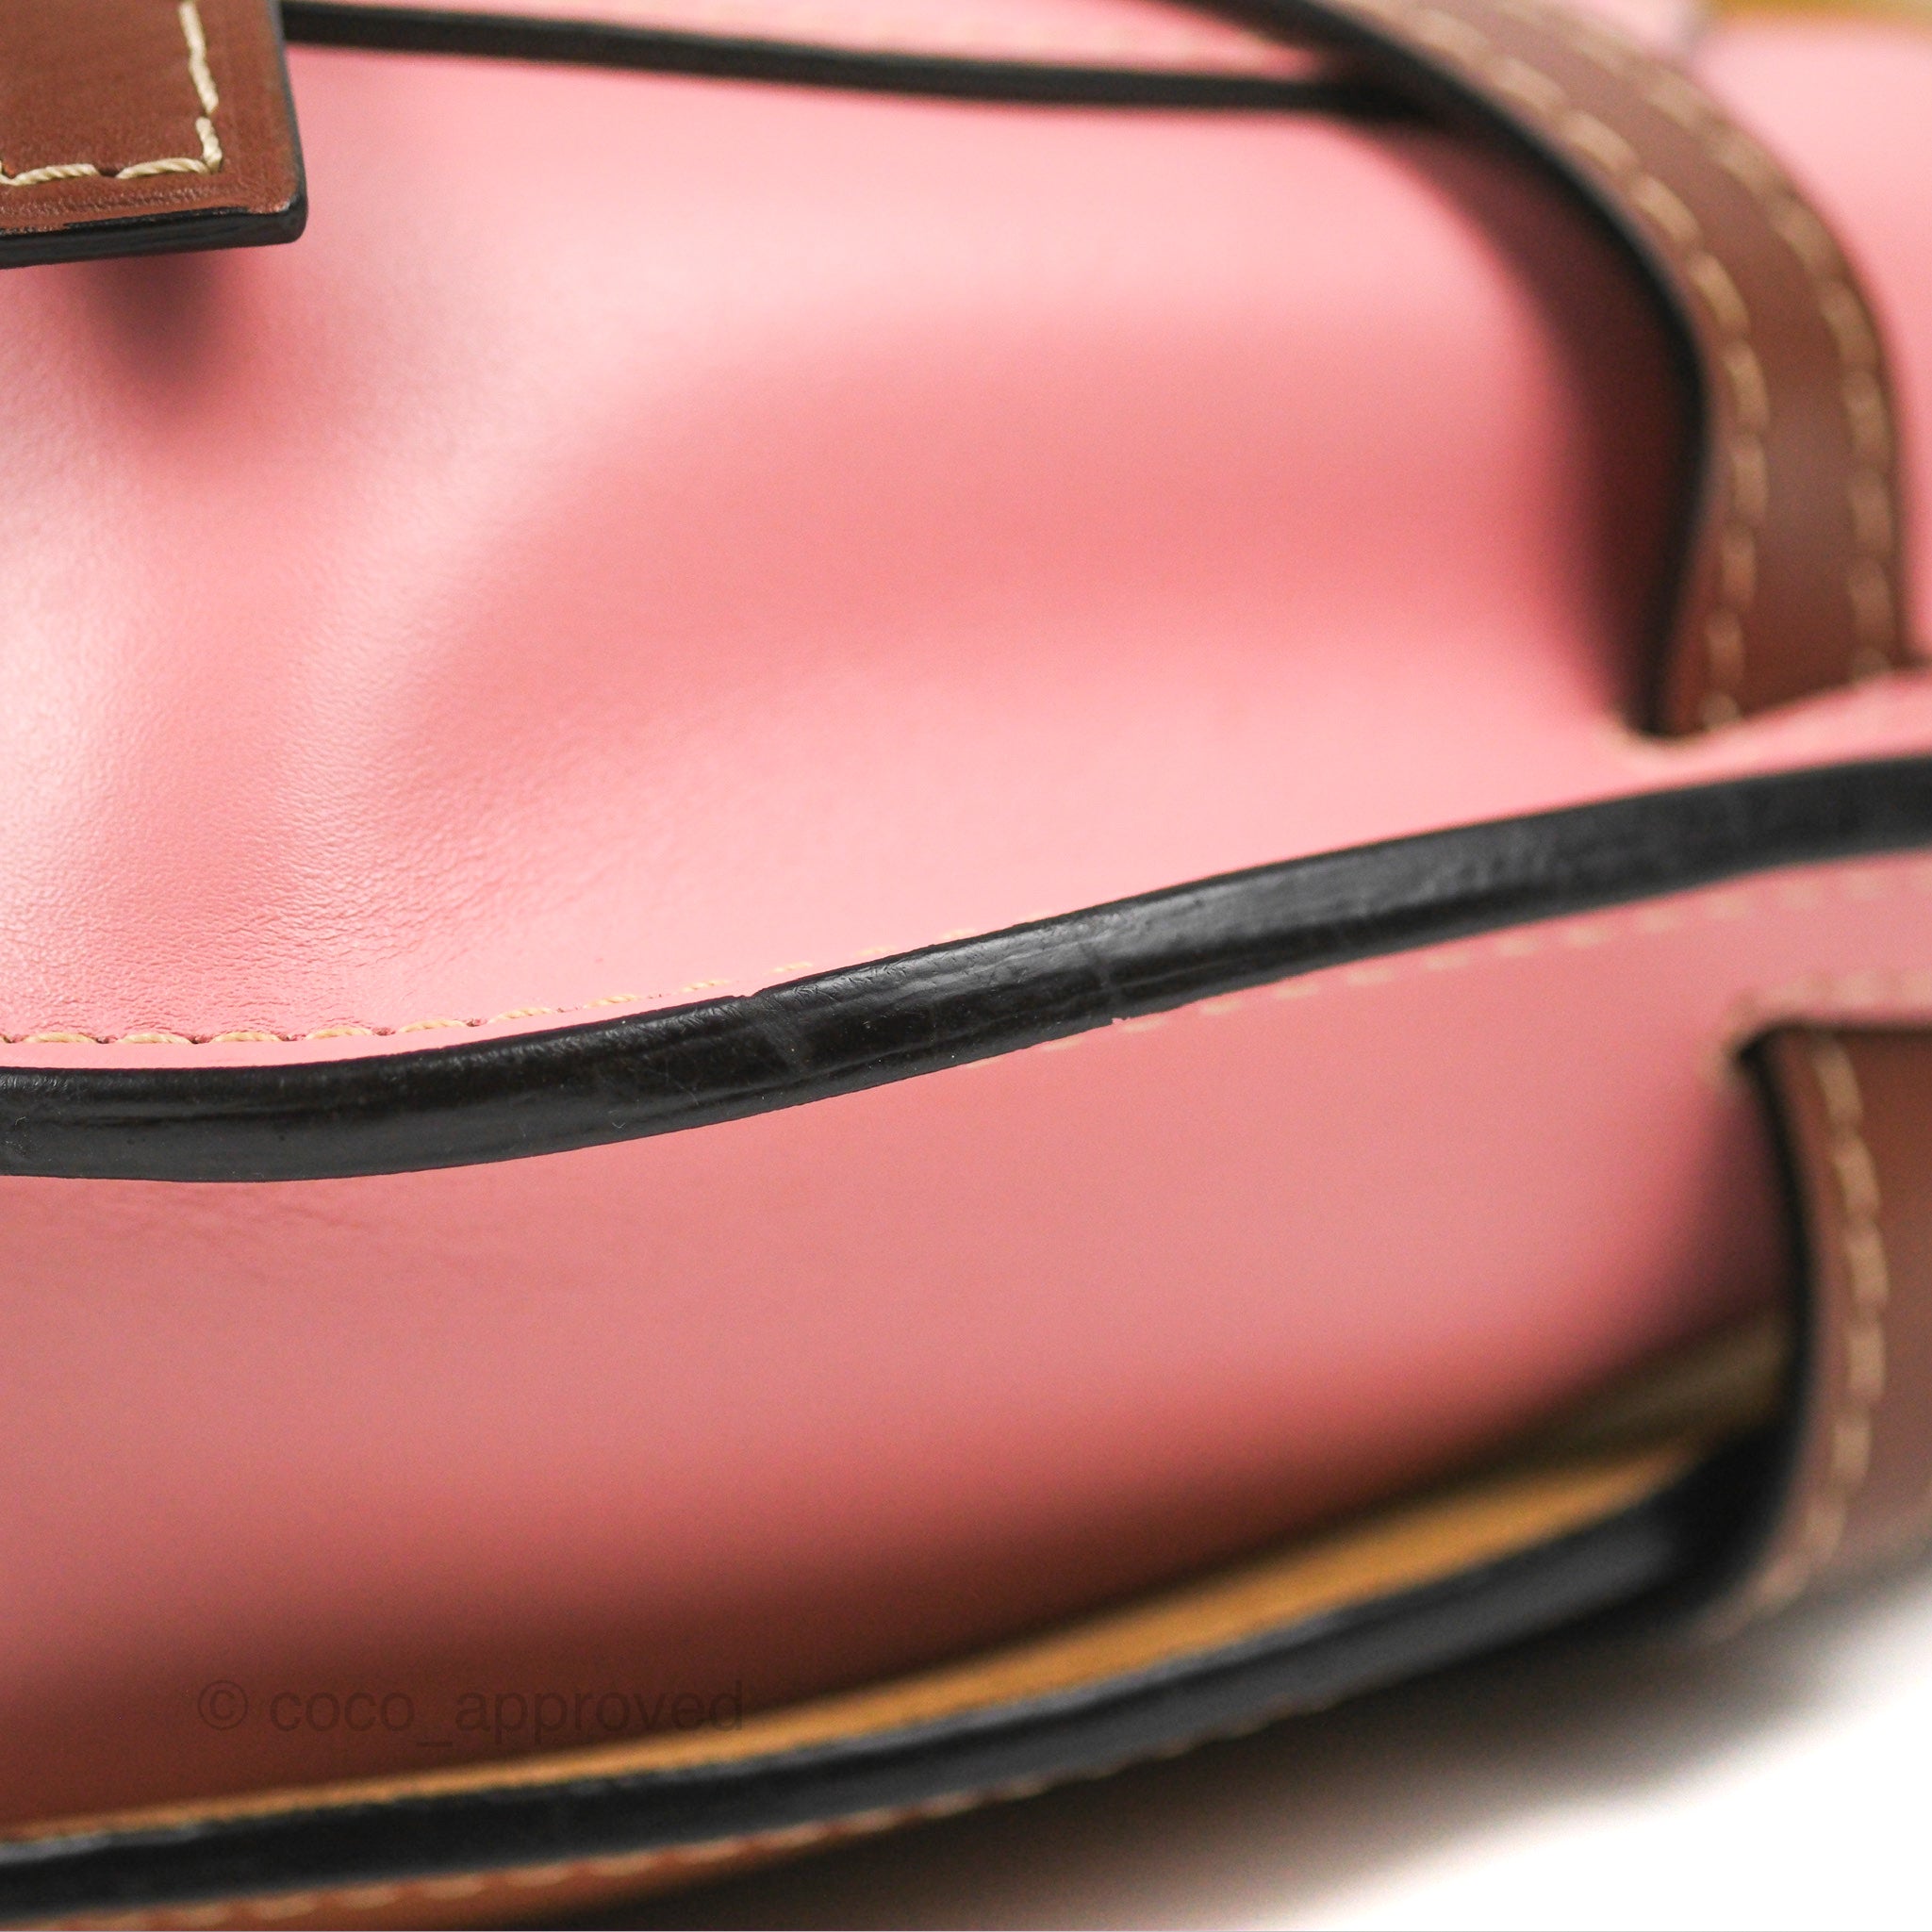 Loewe Small Gate Bag Smooth Calfskin in Tan/Pink